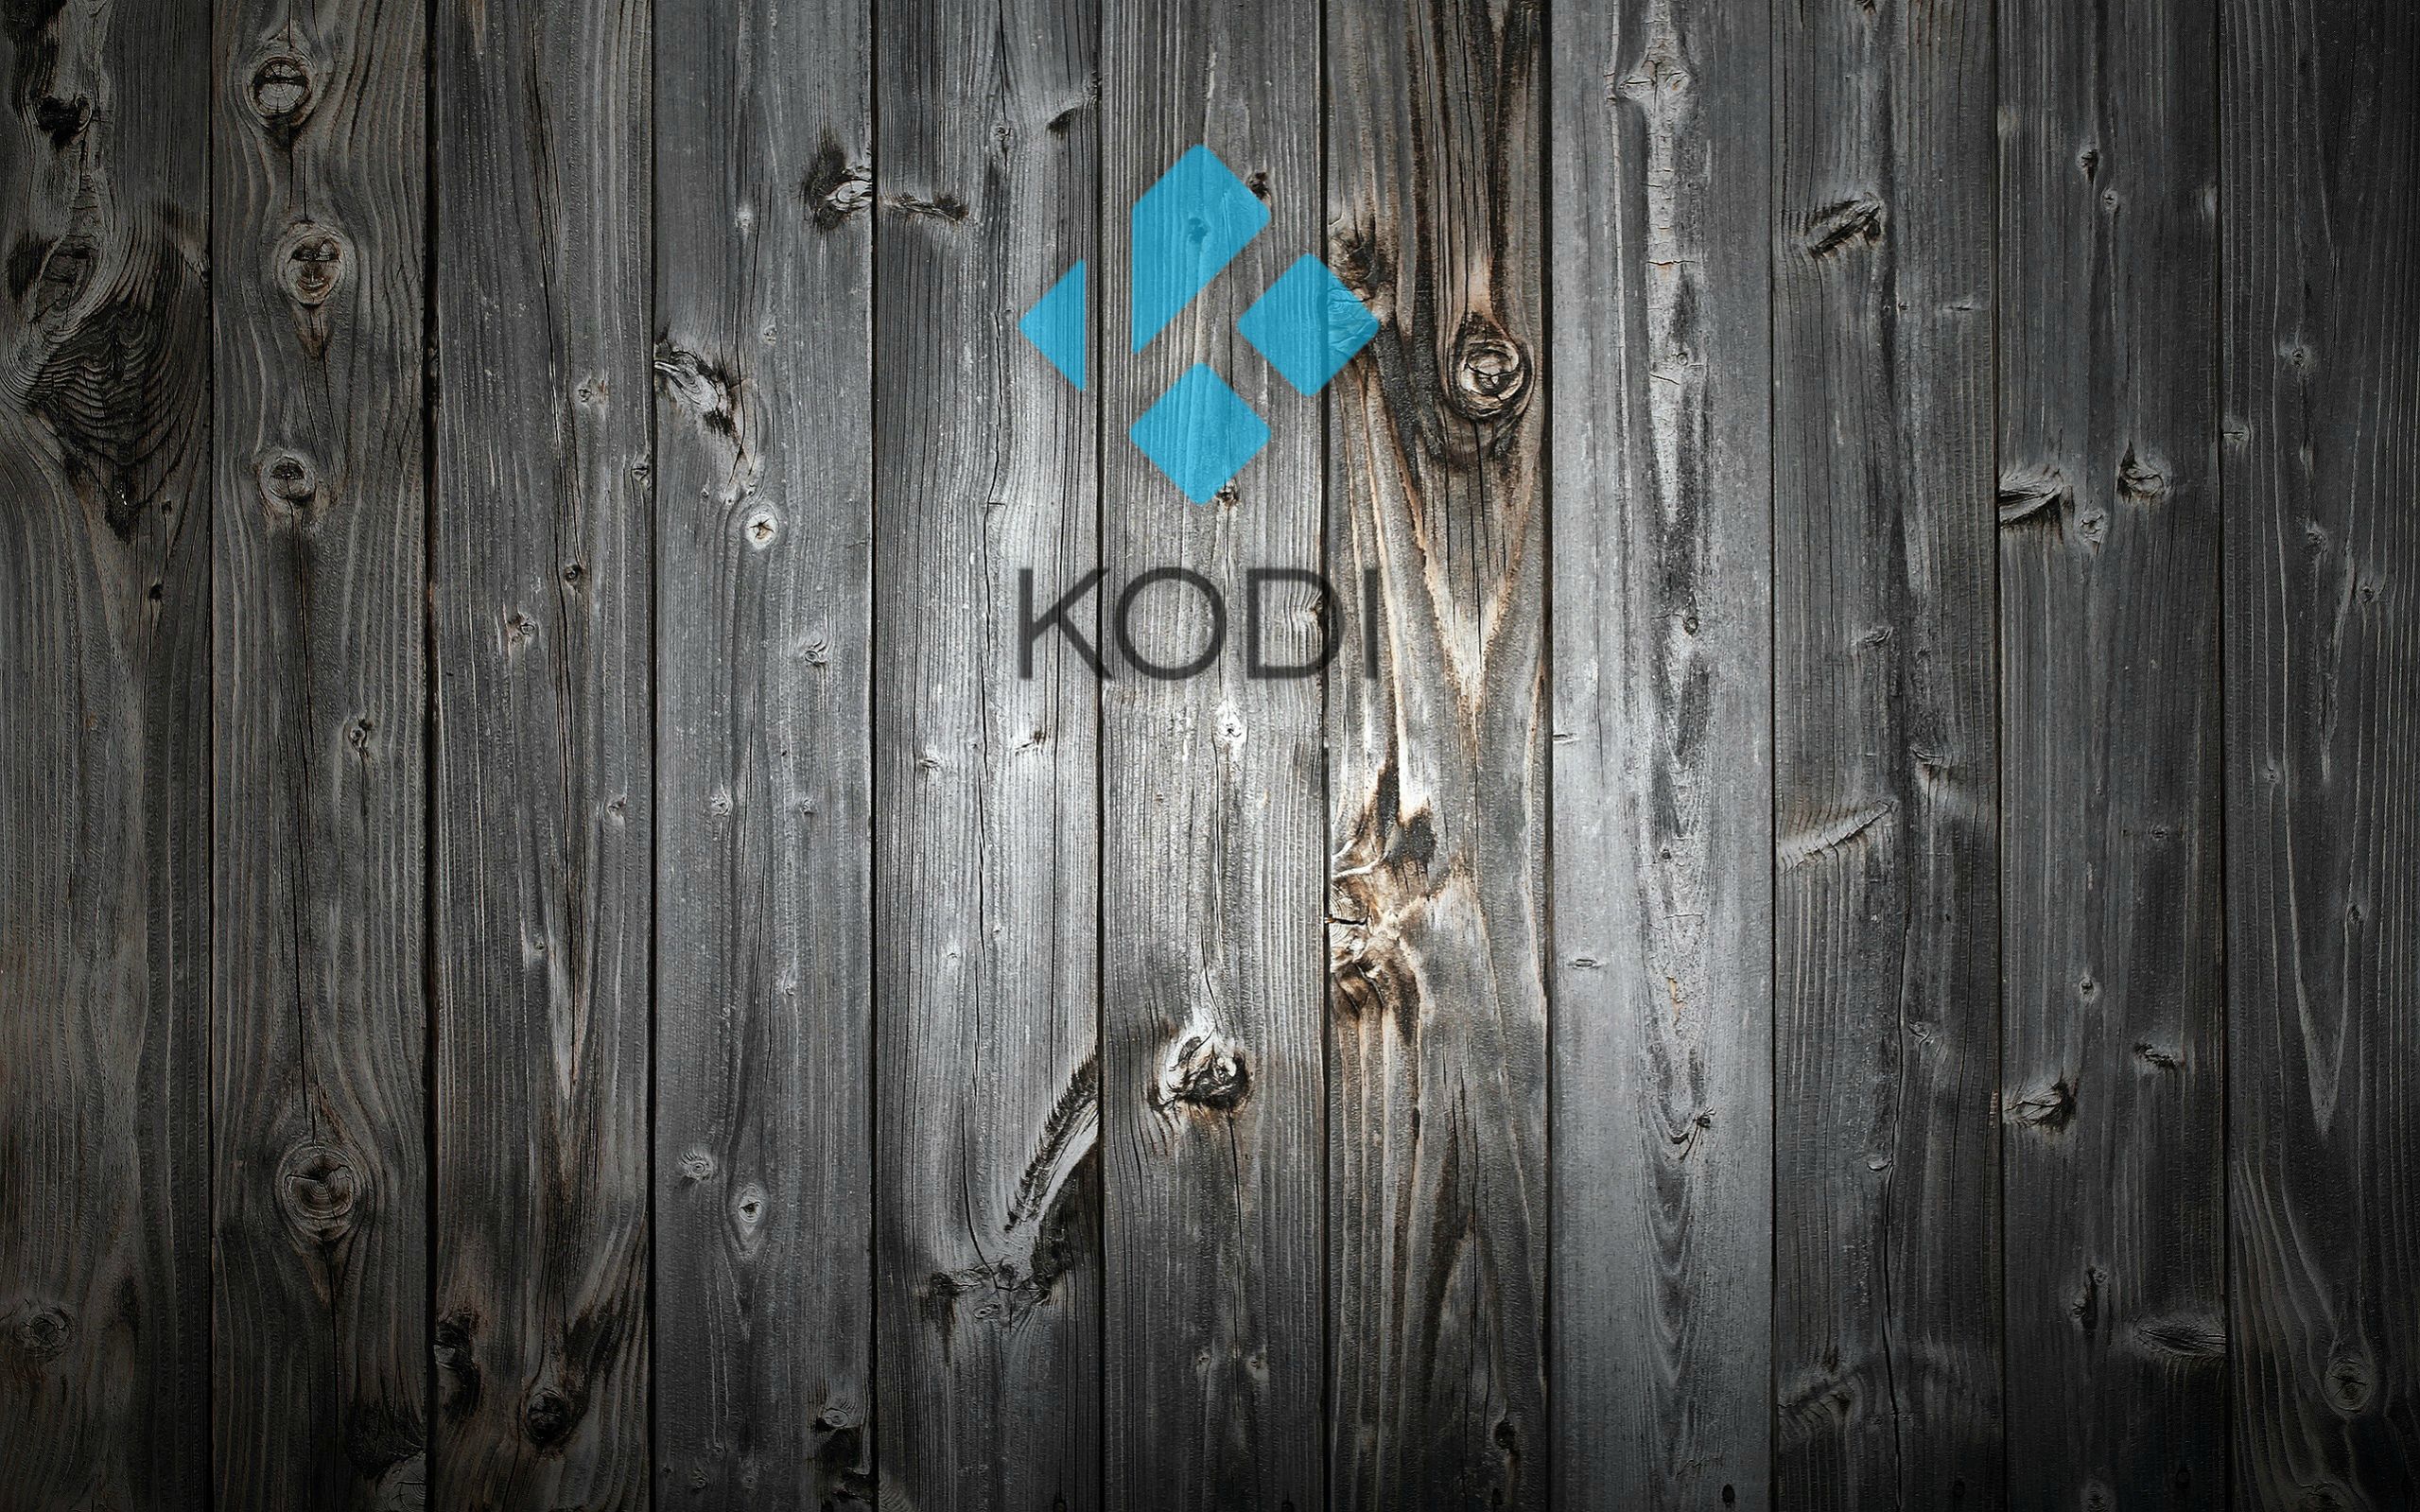 Kodi Wallpapers   Album on Imgur